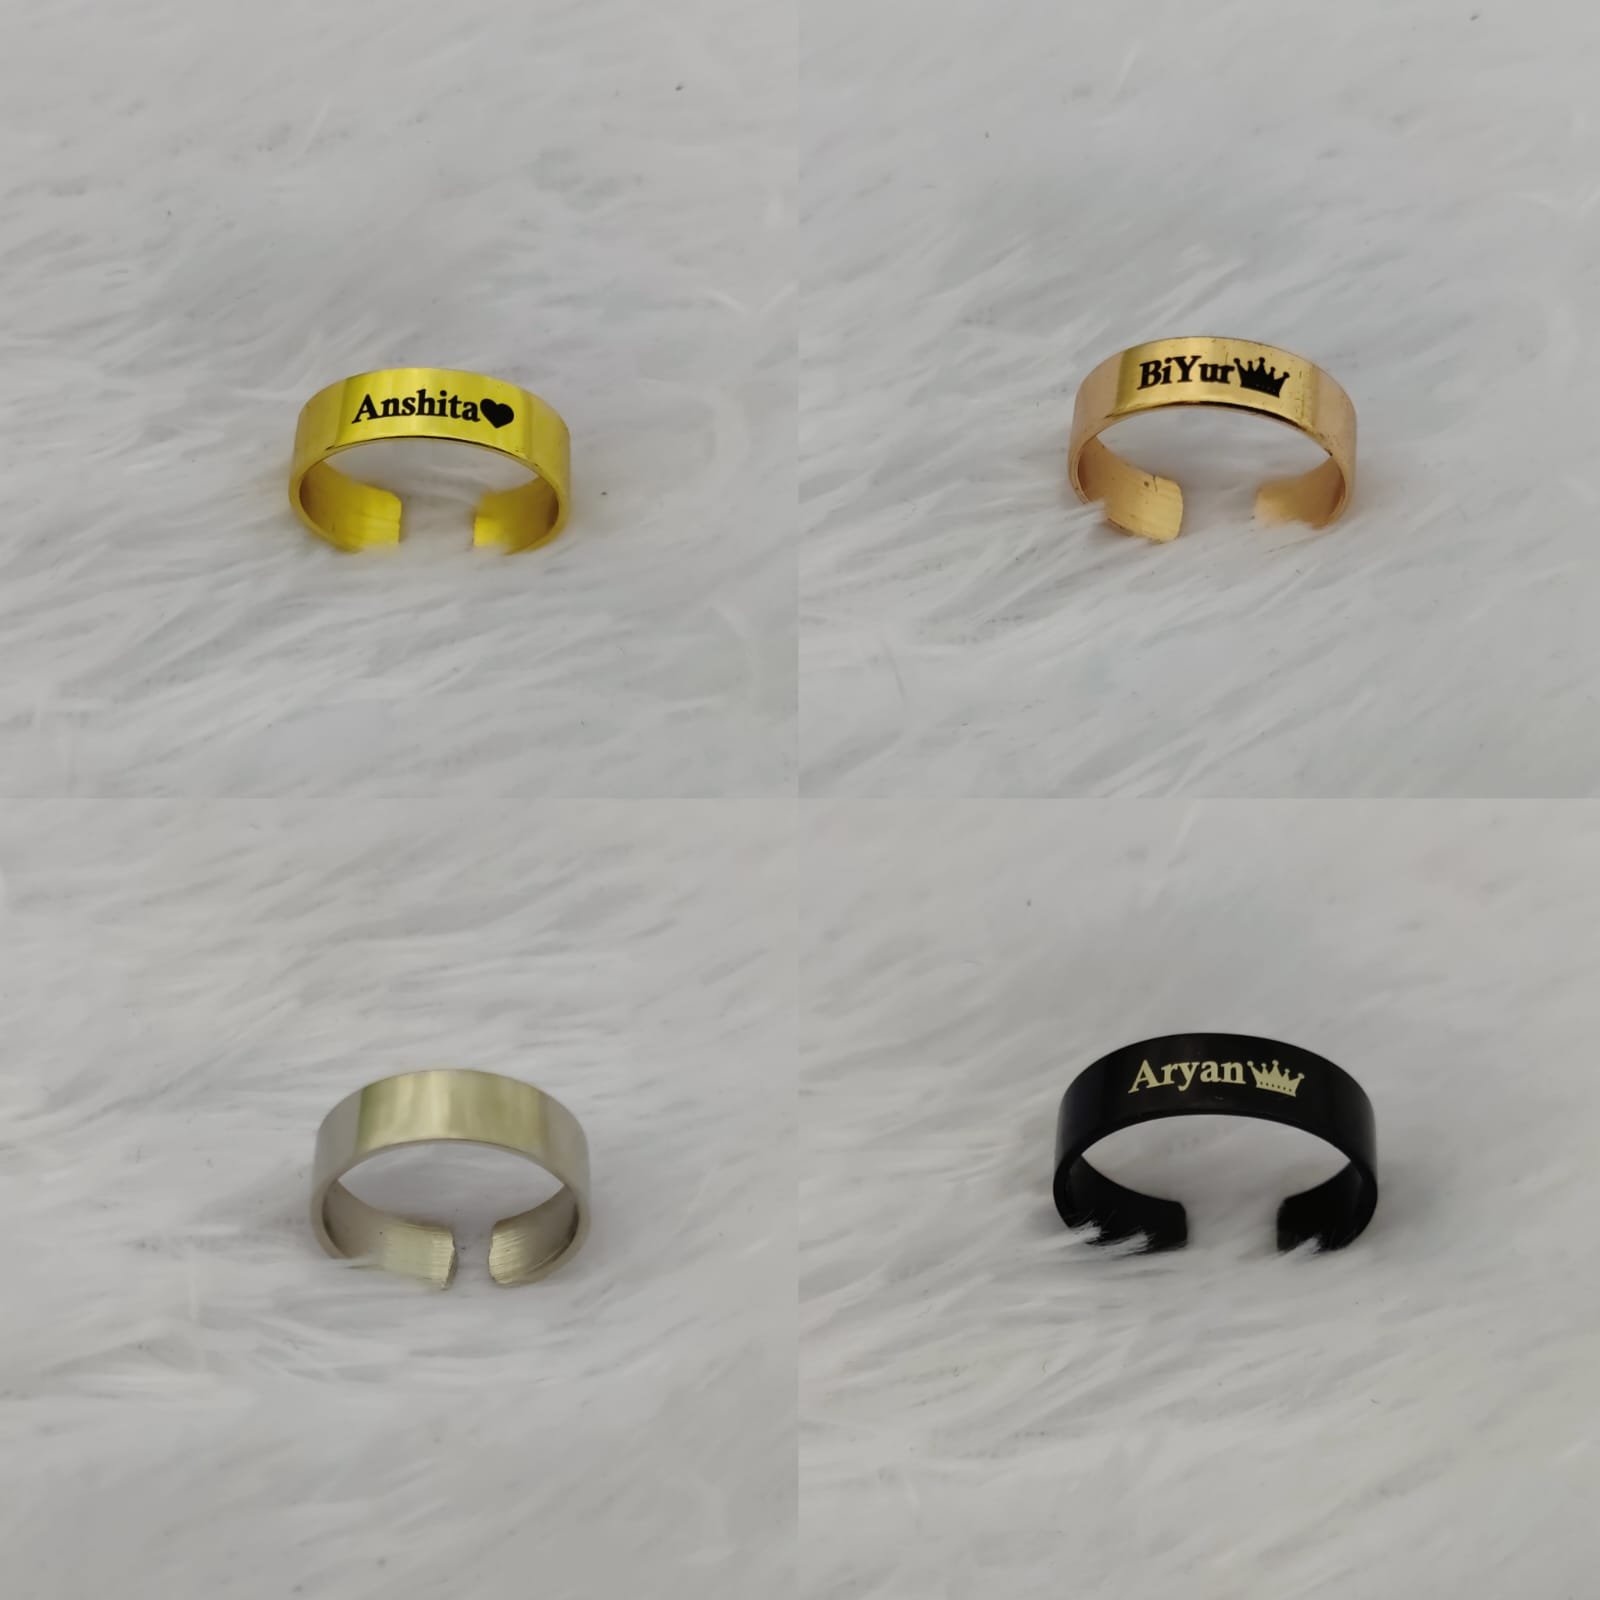 Black Diamond Engagement Ring, Black Diamond Ring, Black Gold Ring, Black  Gold Diamond Engagement Ring, Black Gold Engagement Ring - Etsy | Black  engagement ring, Black gold ring, Black rings